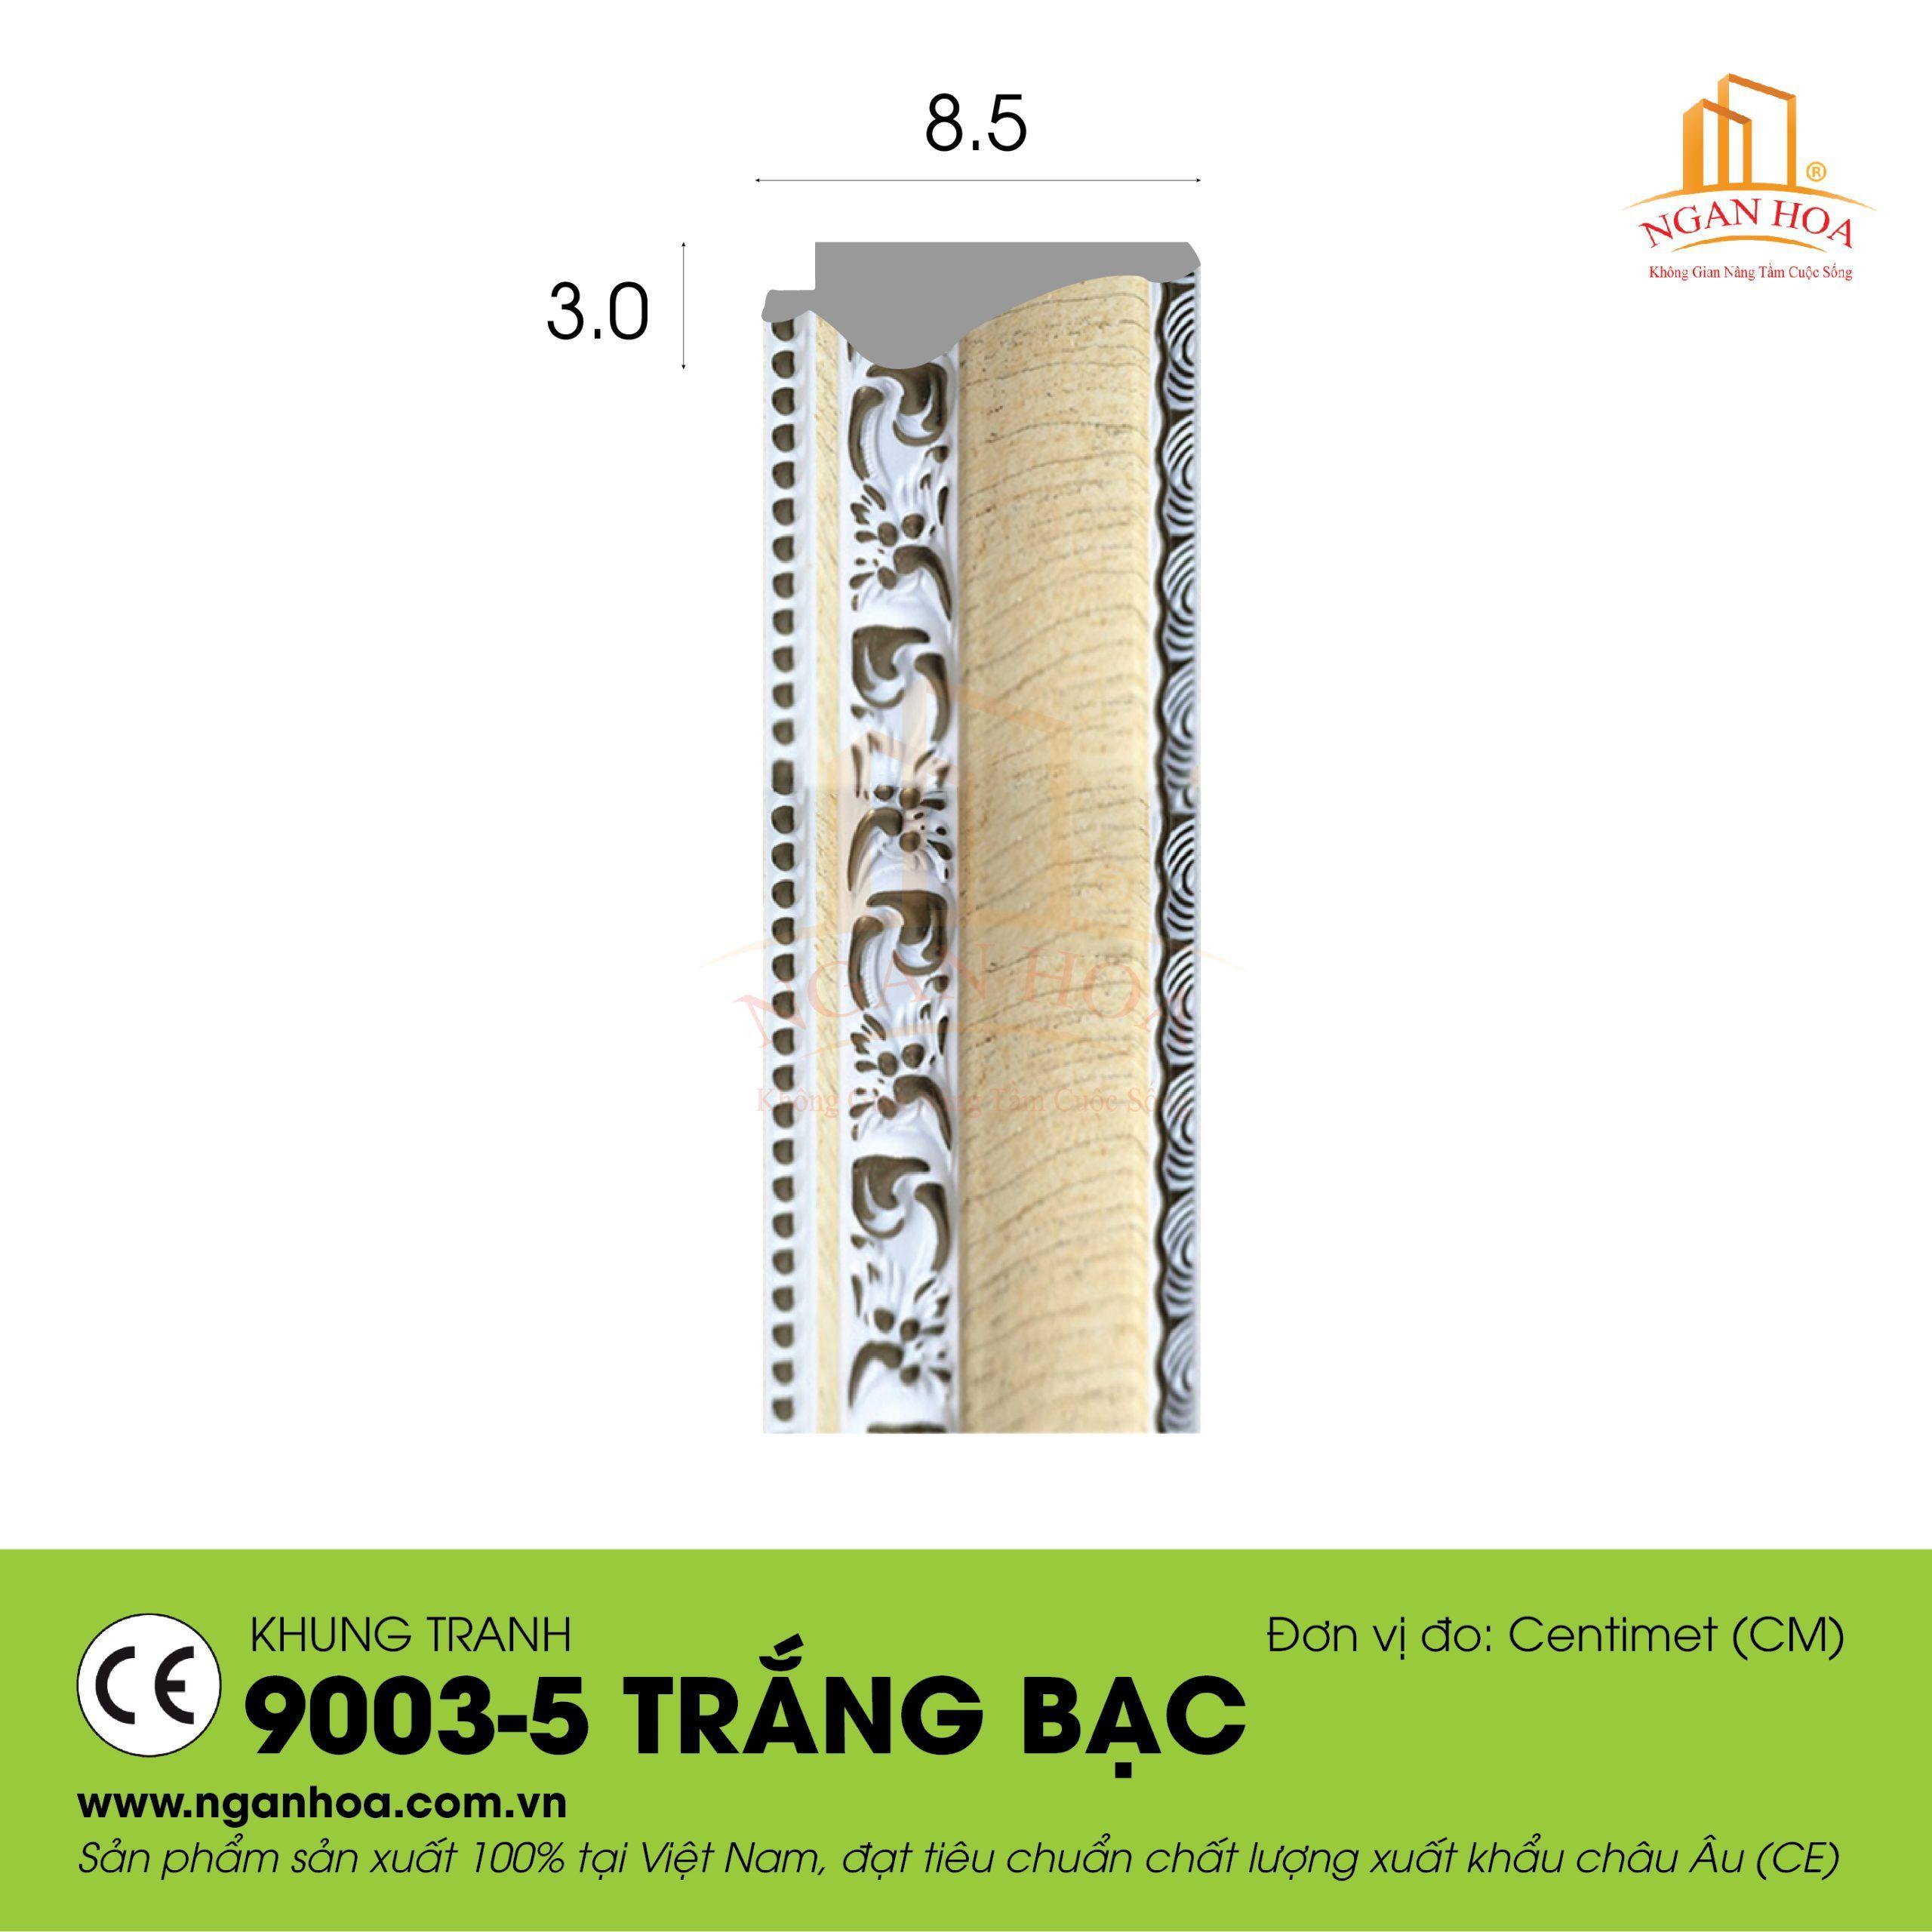 KT 9003 5 Trang bac scaled